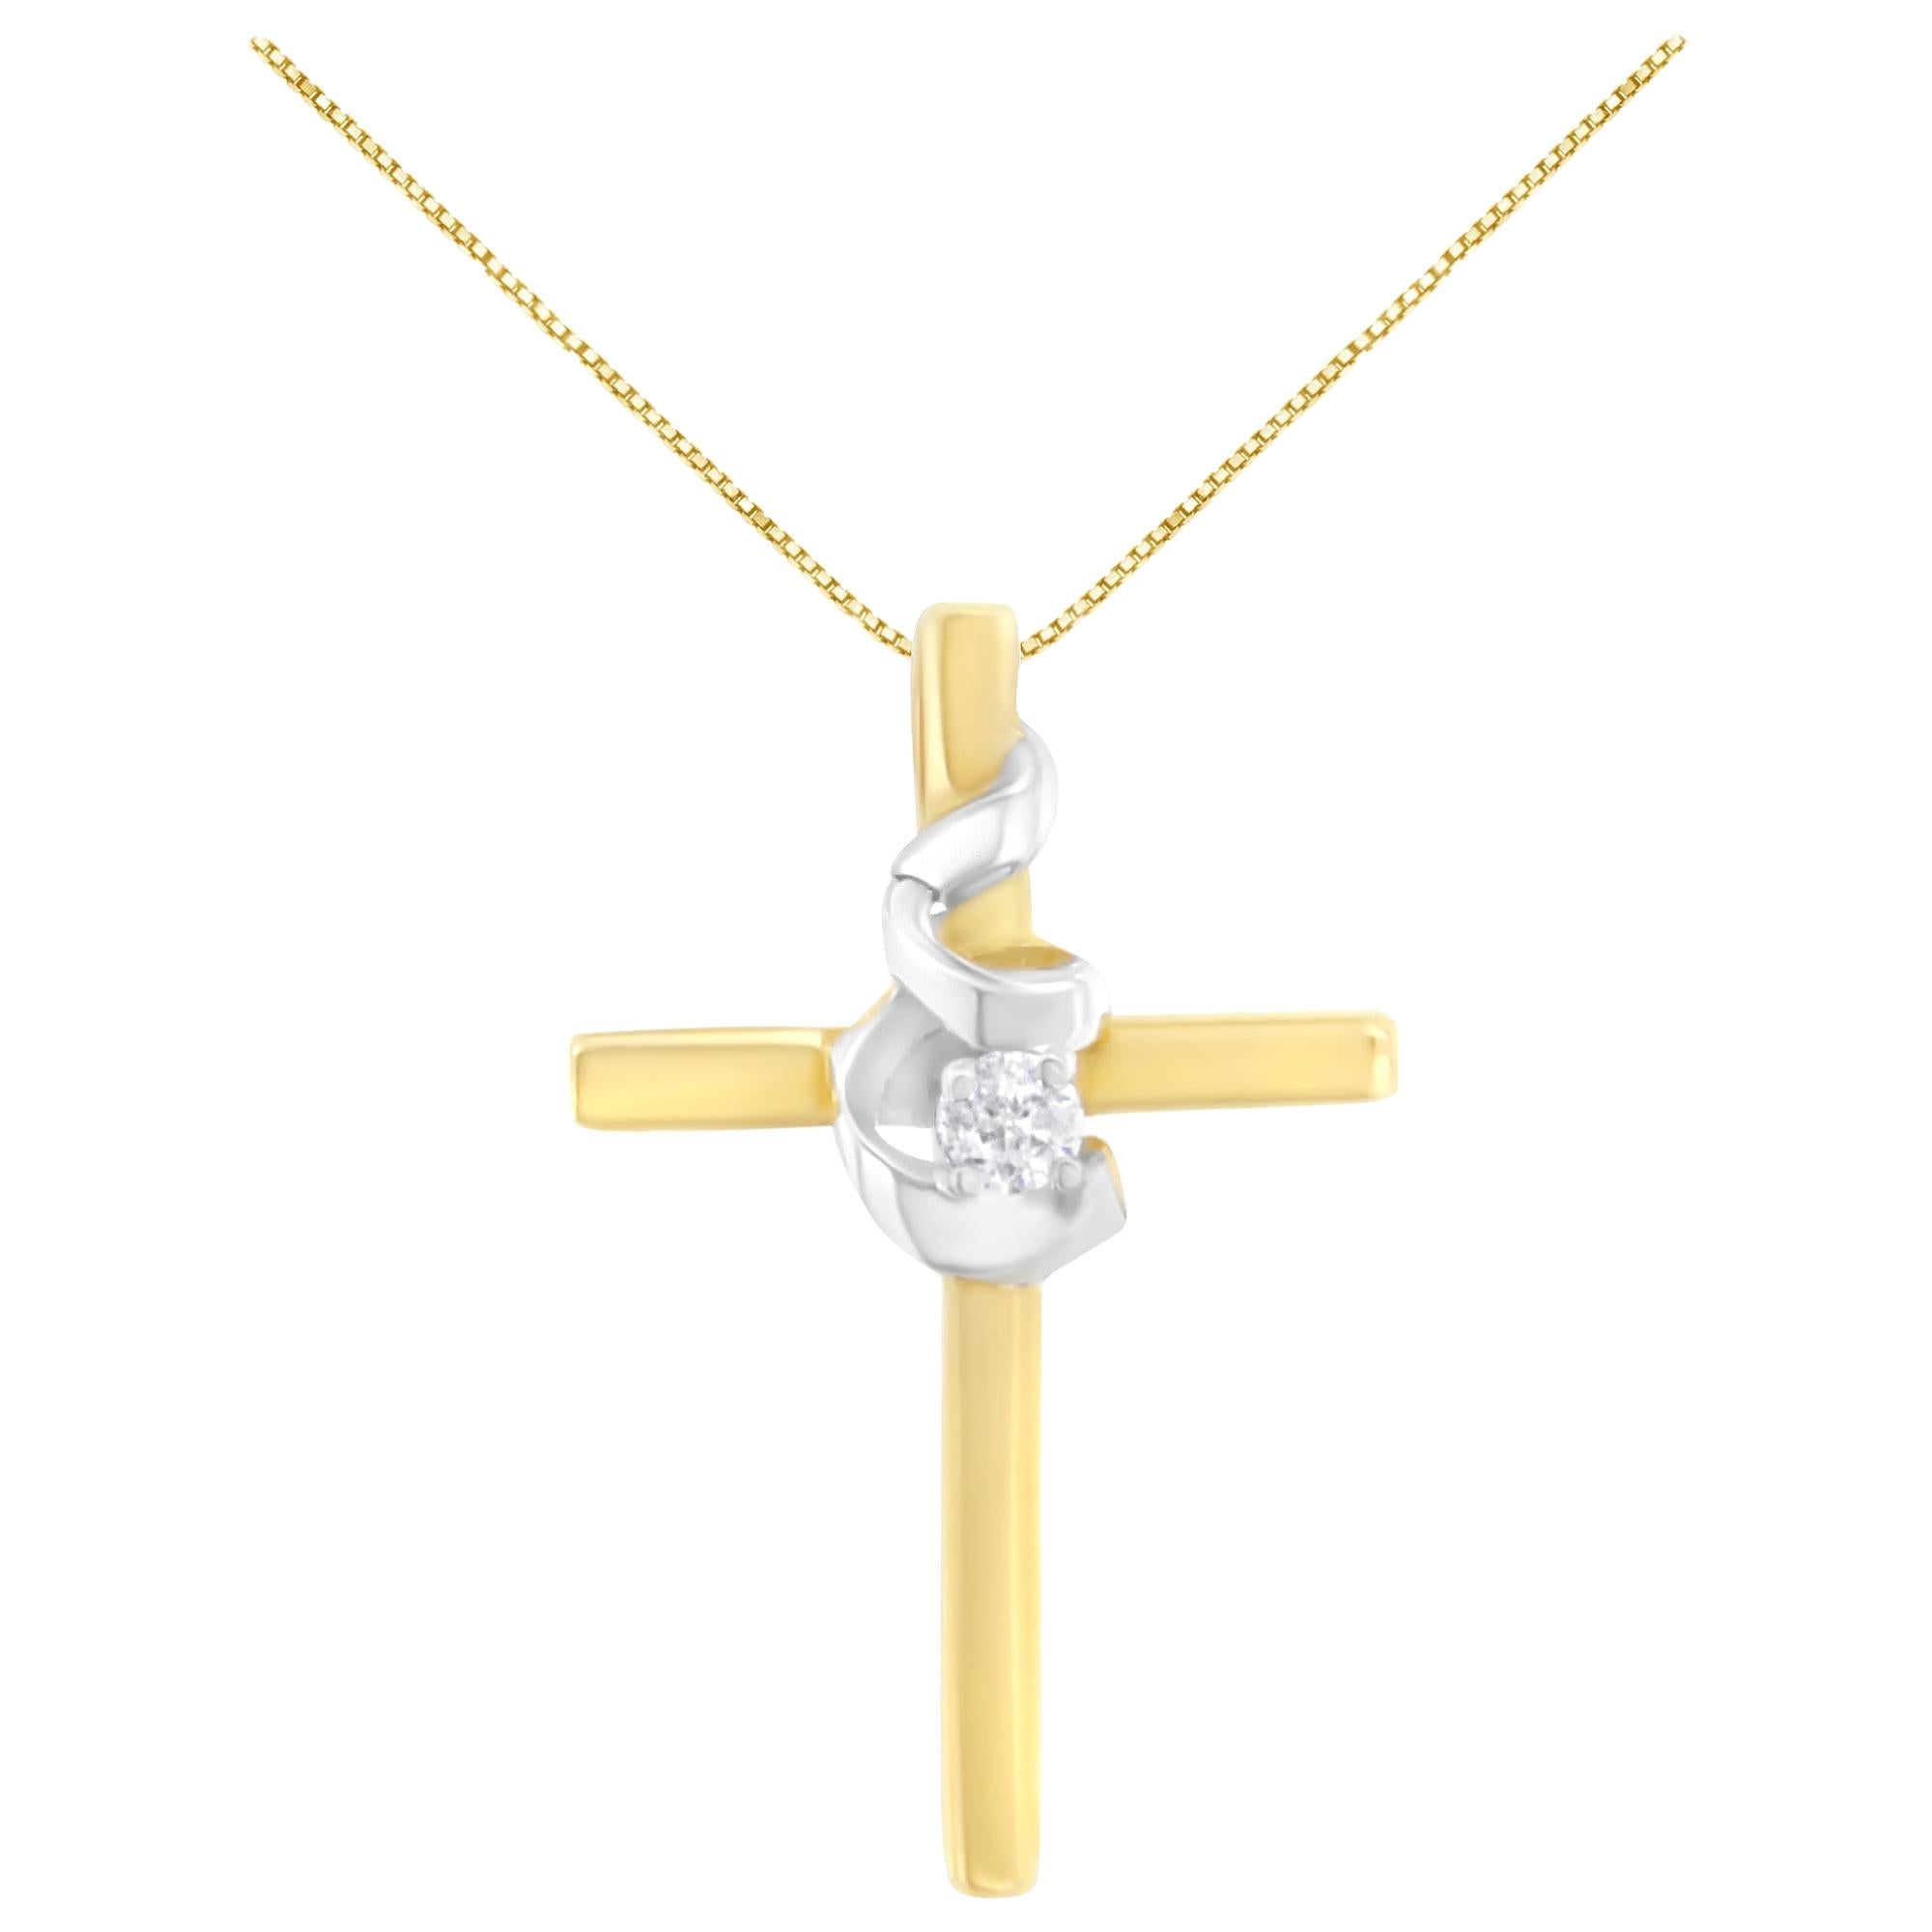 10K Two-Tone Gold 1/25 Carat Diamond Accent Cross Pendant Necklace